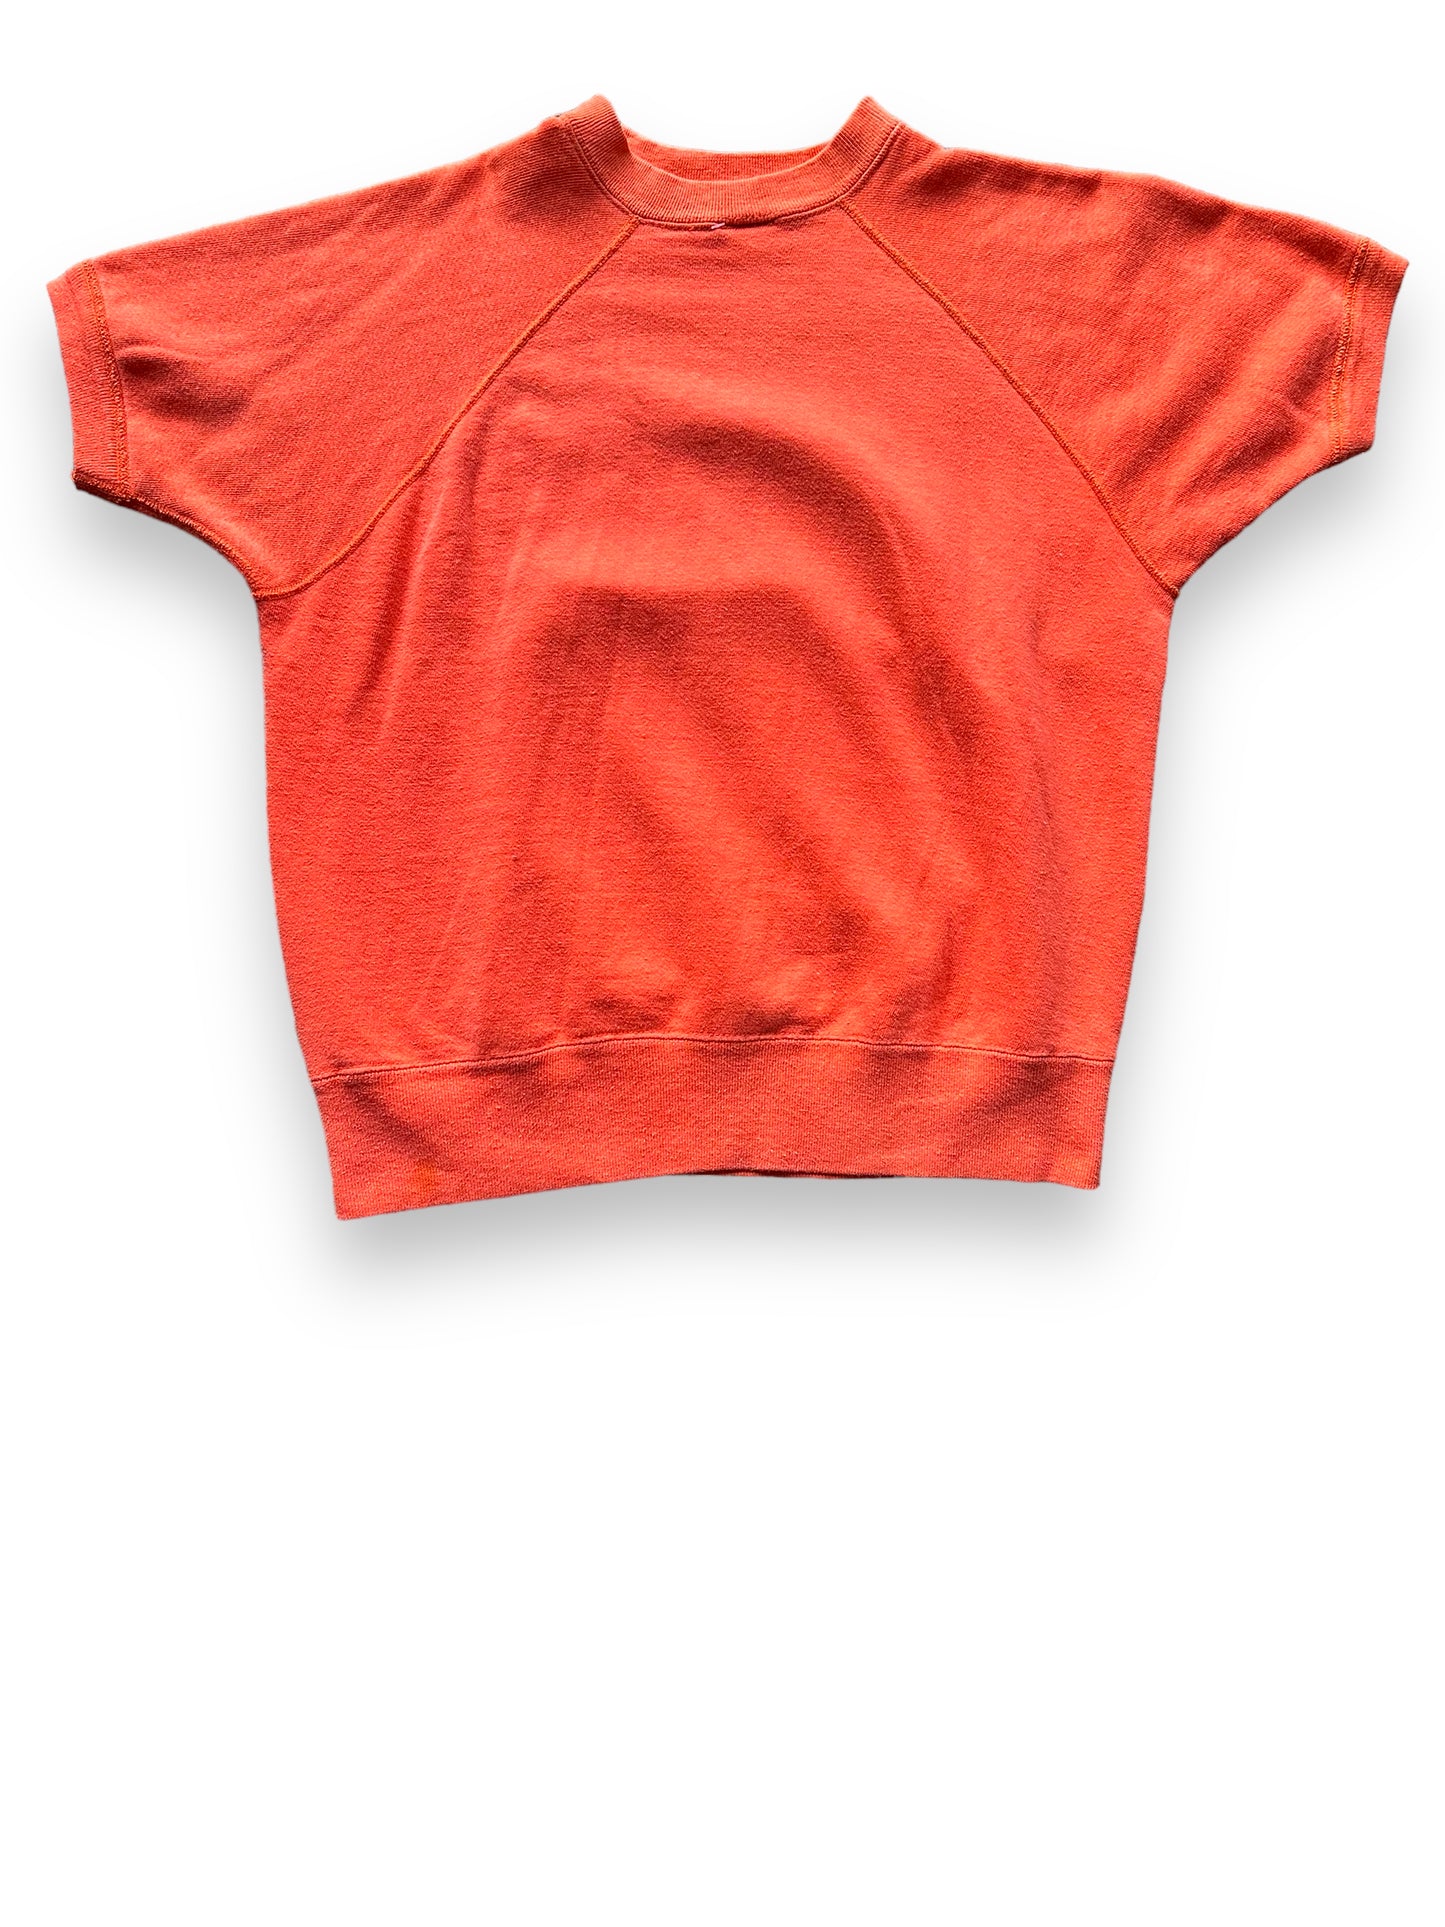 Rear View of Vintage Artex Kansas University 1969 Orange Bowl Short Sleeve Crewneck Sweatshirt SZ L | Barn Owl Vintage Clothing | Seattle Vintage Sweatshirts